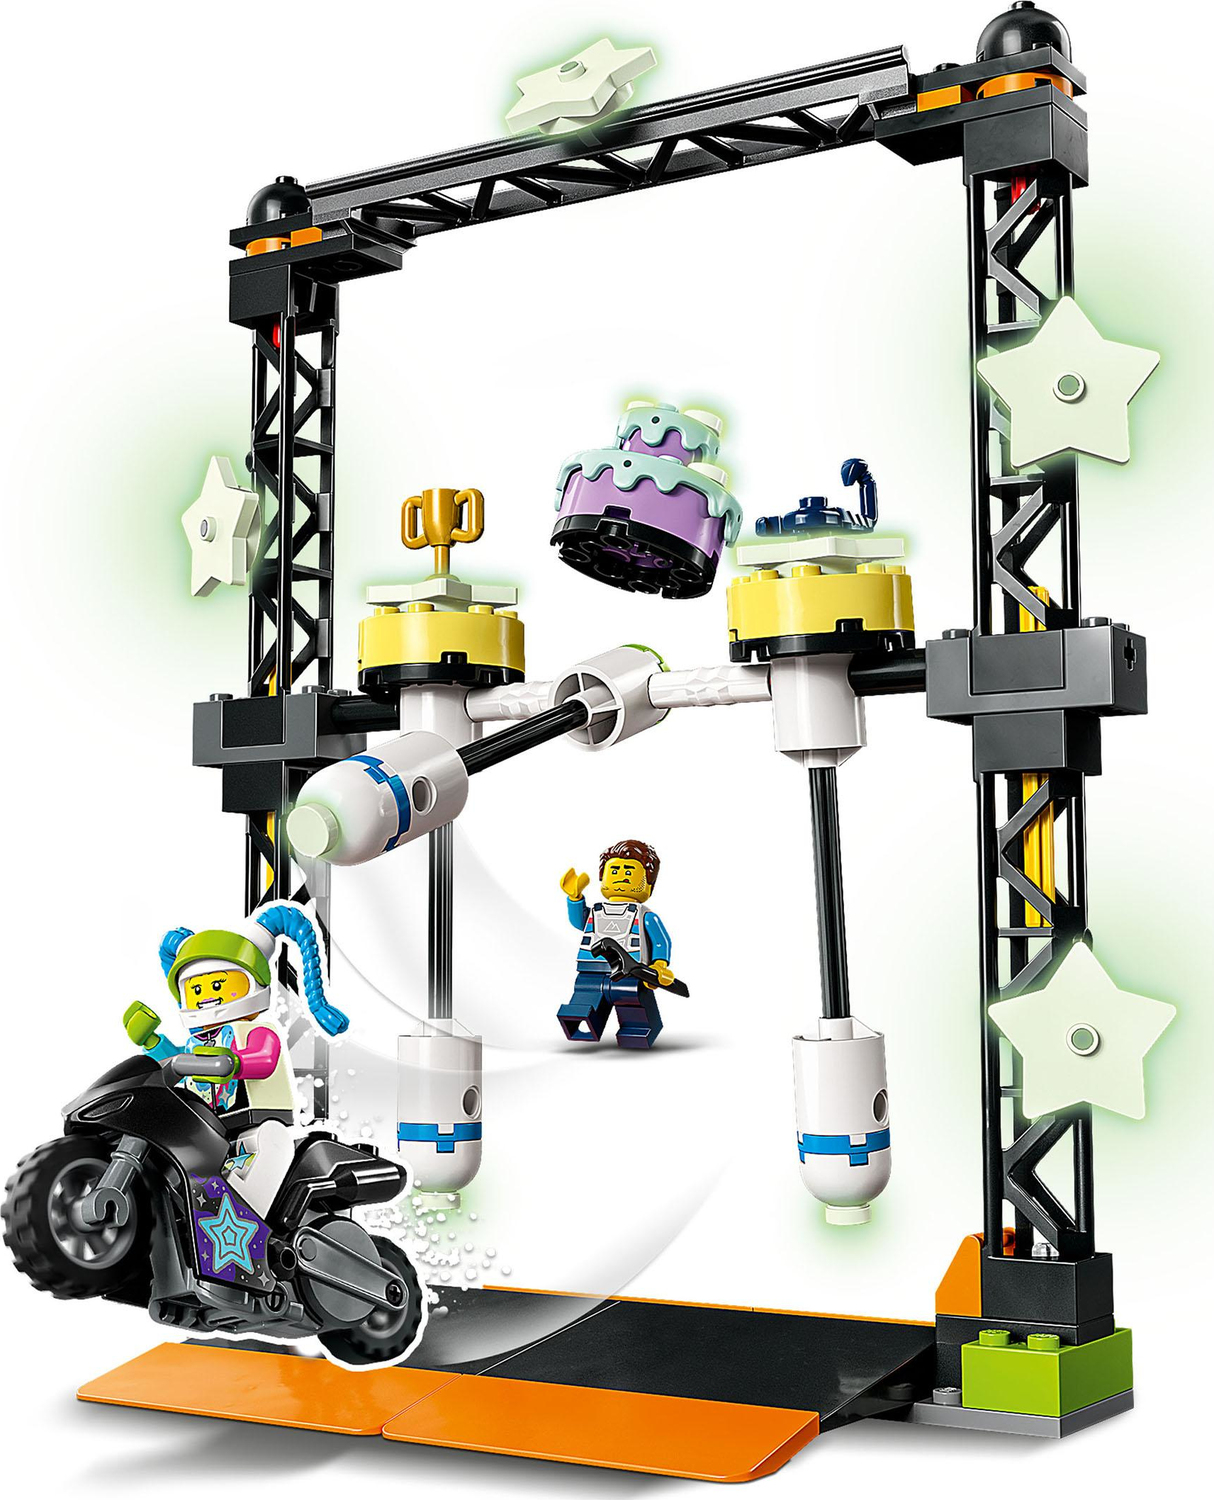 LEGO City Stuntz The Knockdown Challenge Set